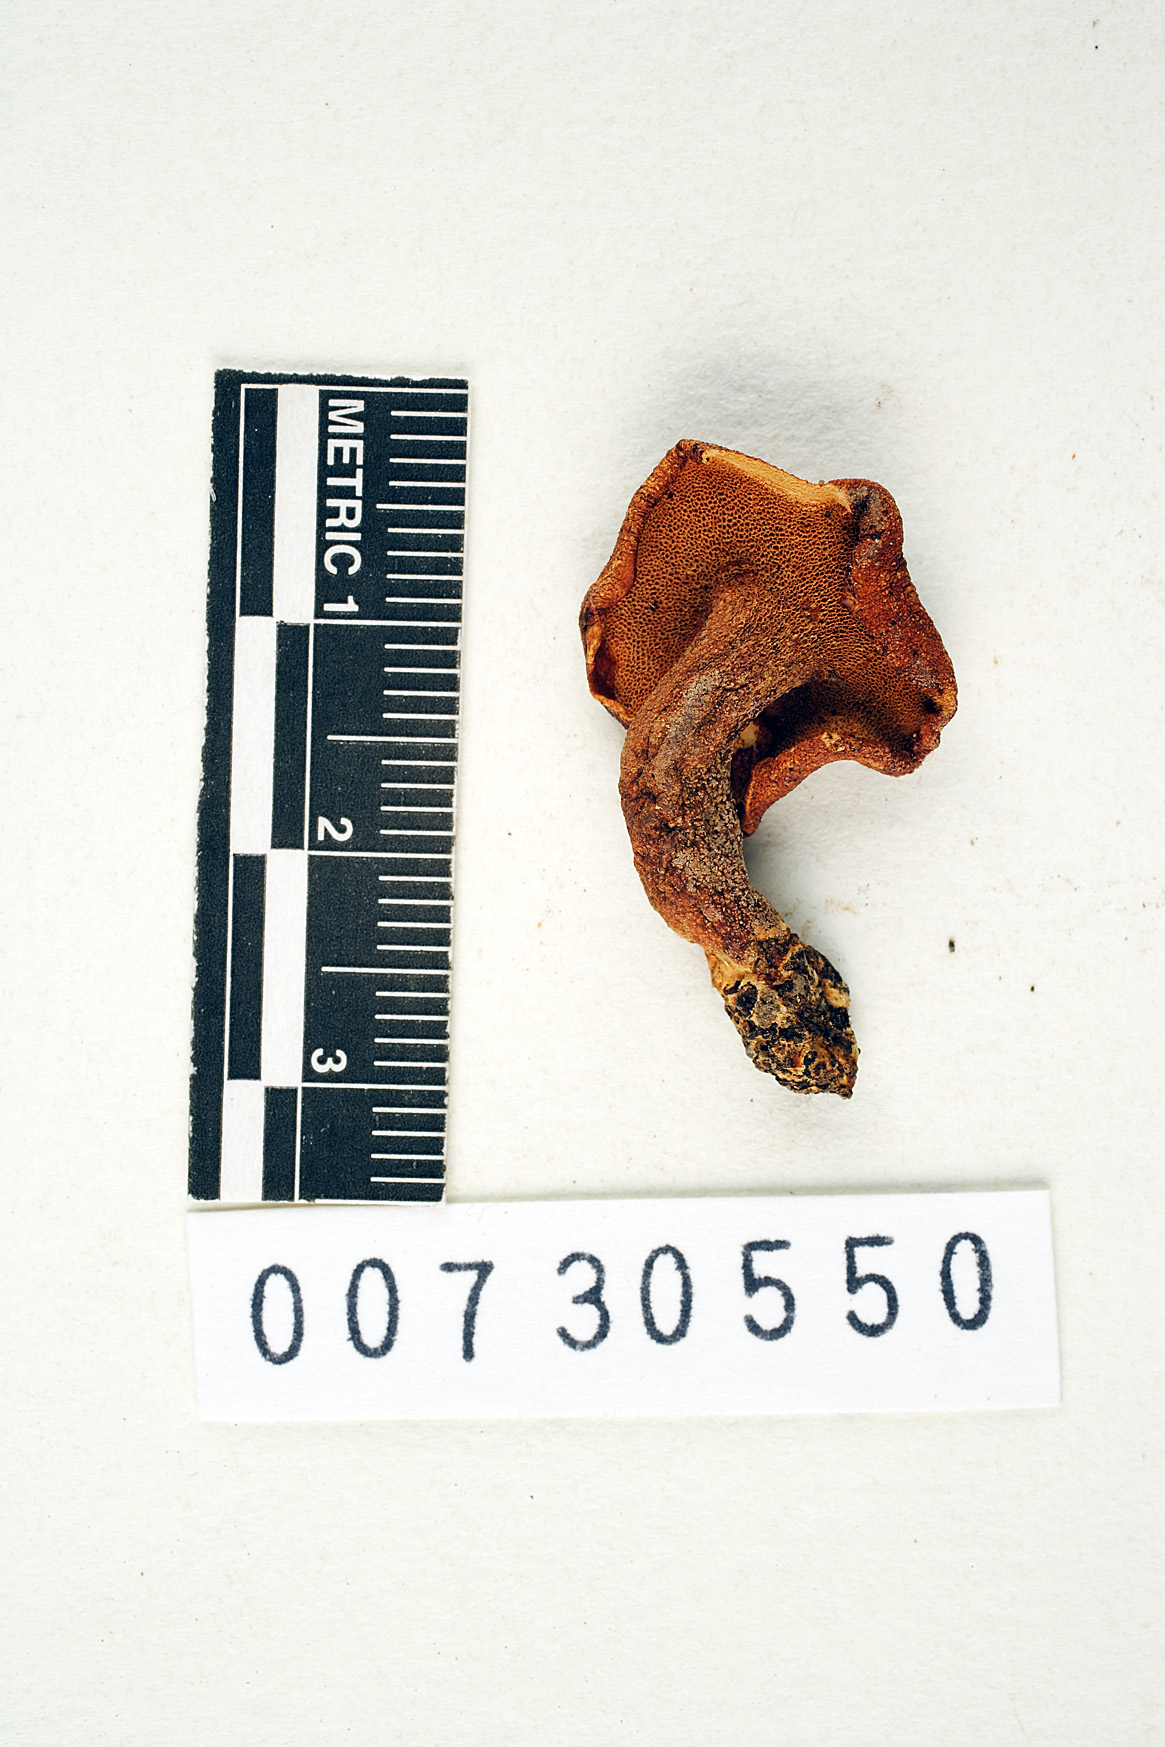 Polyporus caeruleoporus image